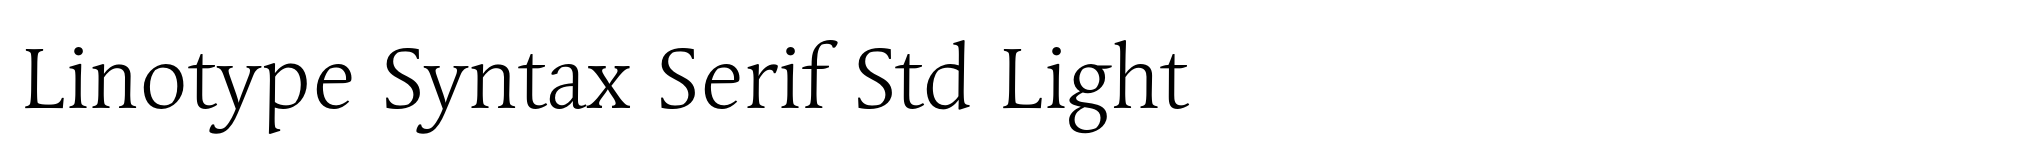 Linotype Syntax Serif Std Light image